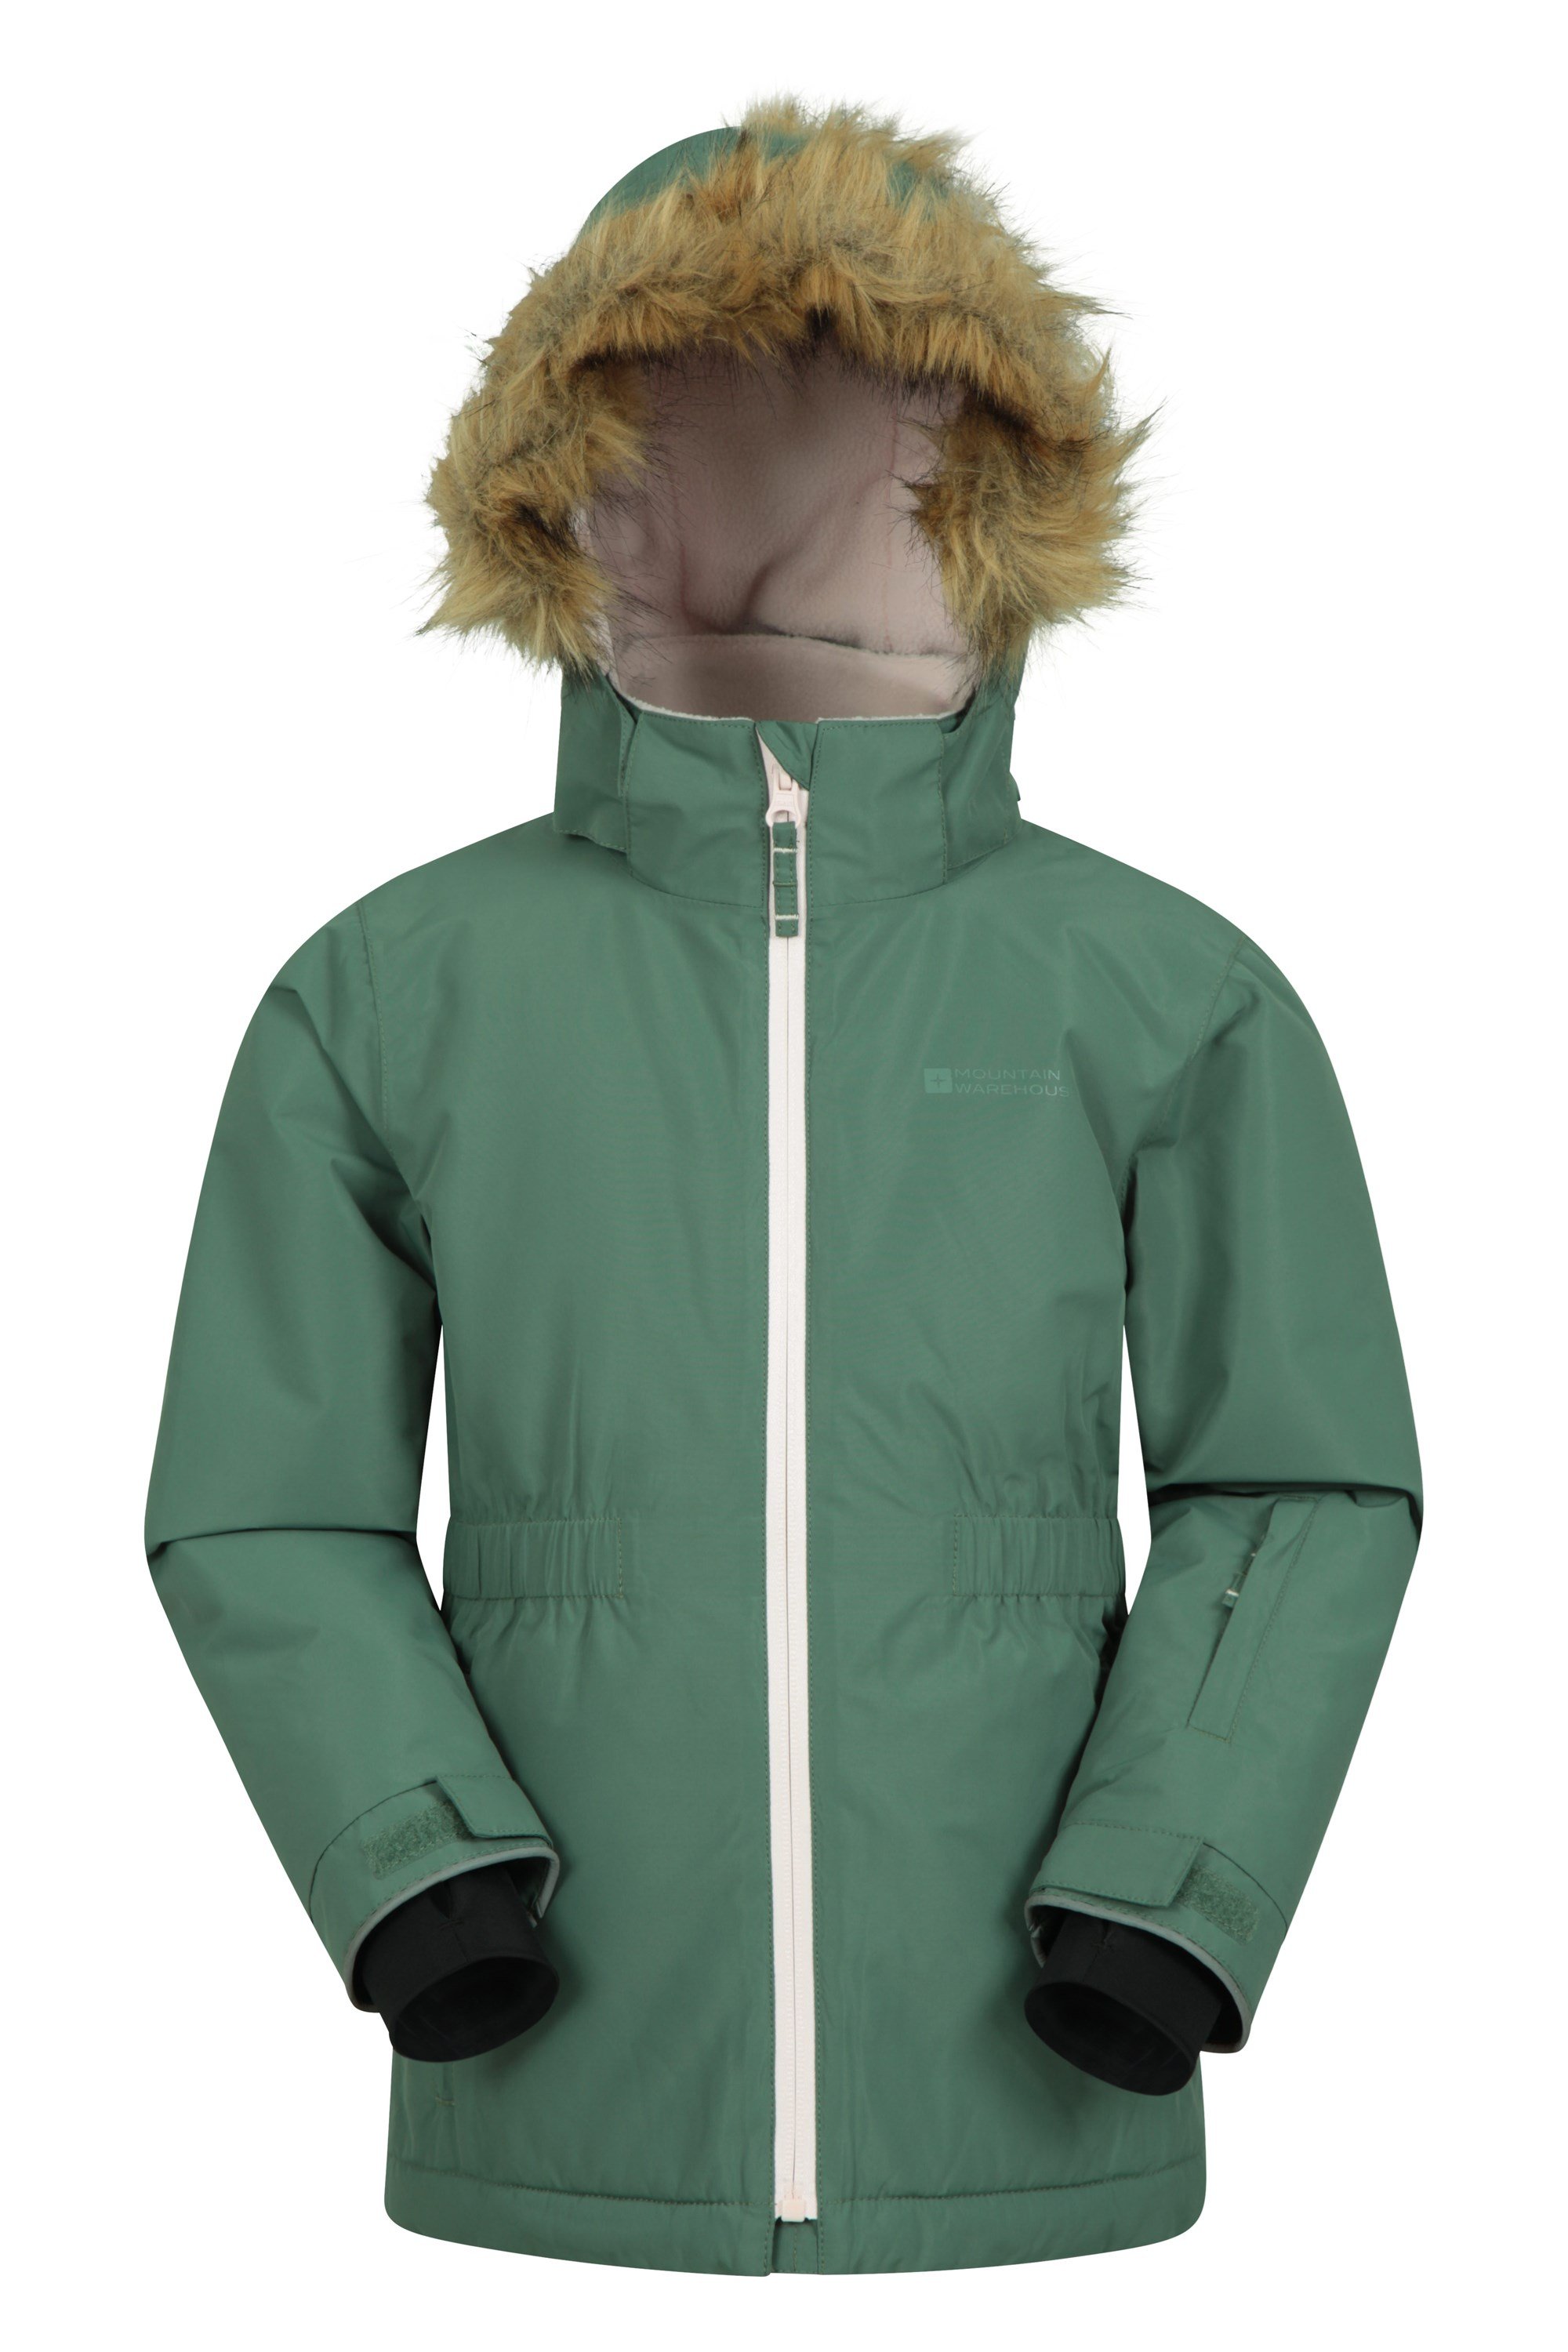 Unisex Winter Jacket Mountain Warehouse Snow Park Ski Jacket 